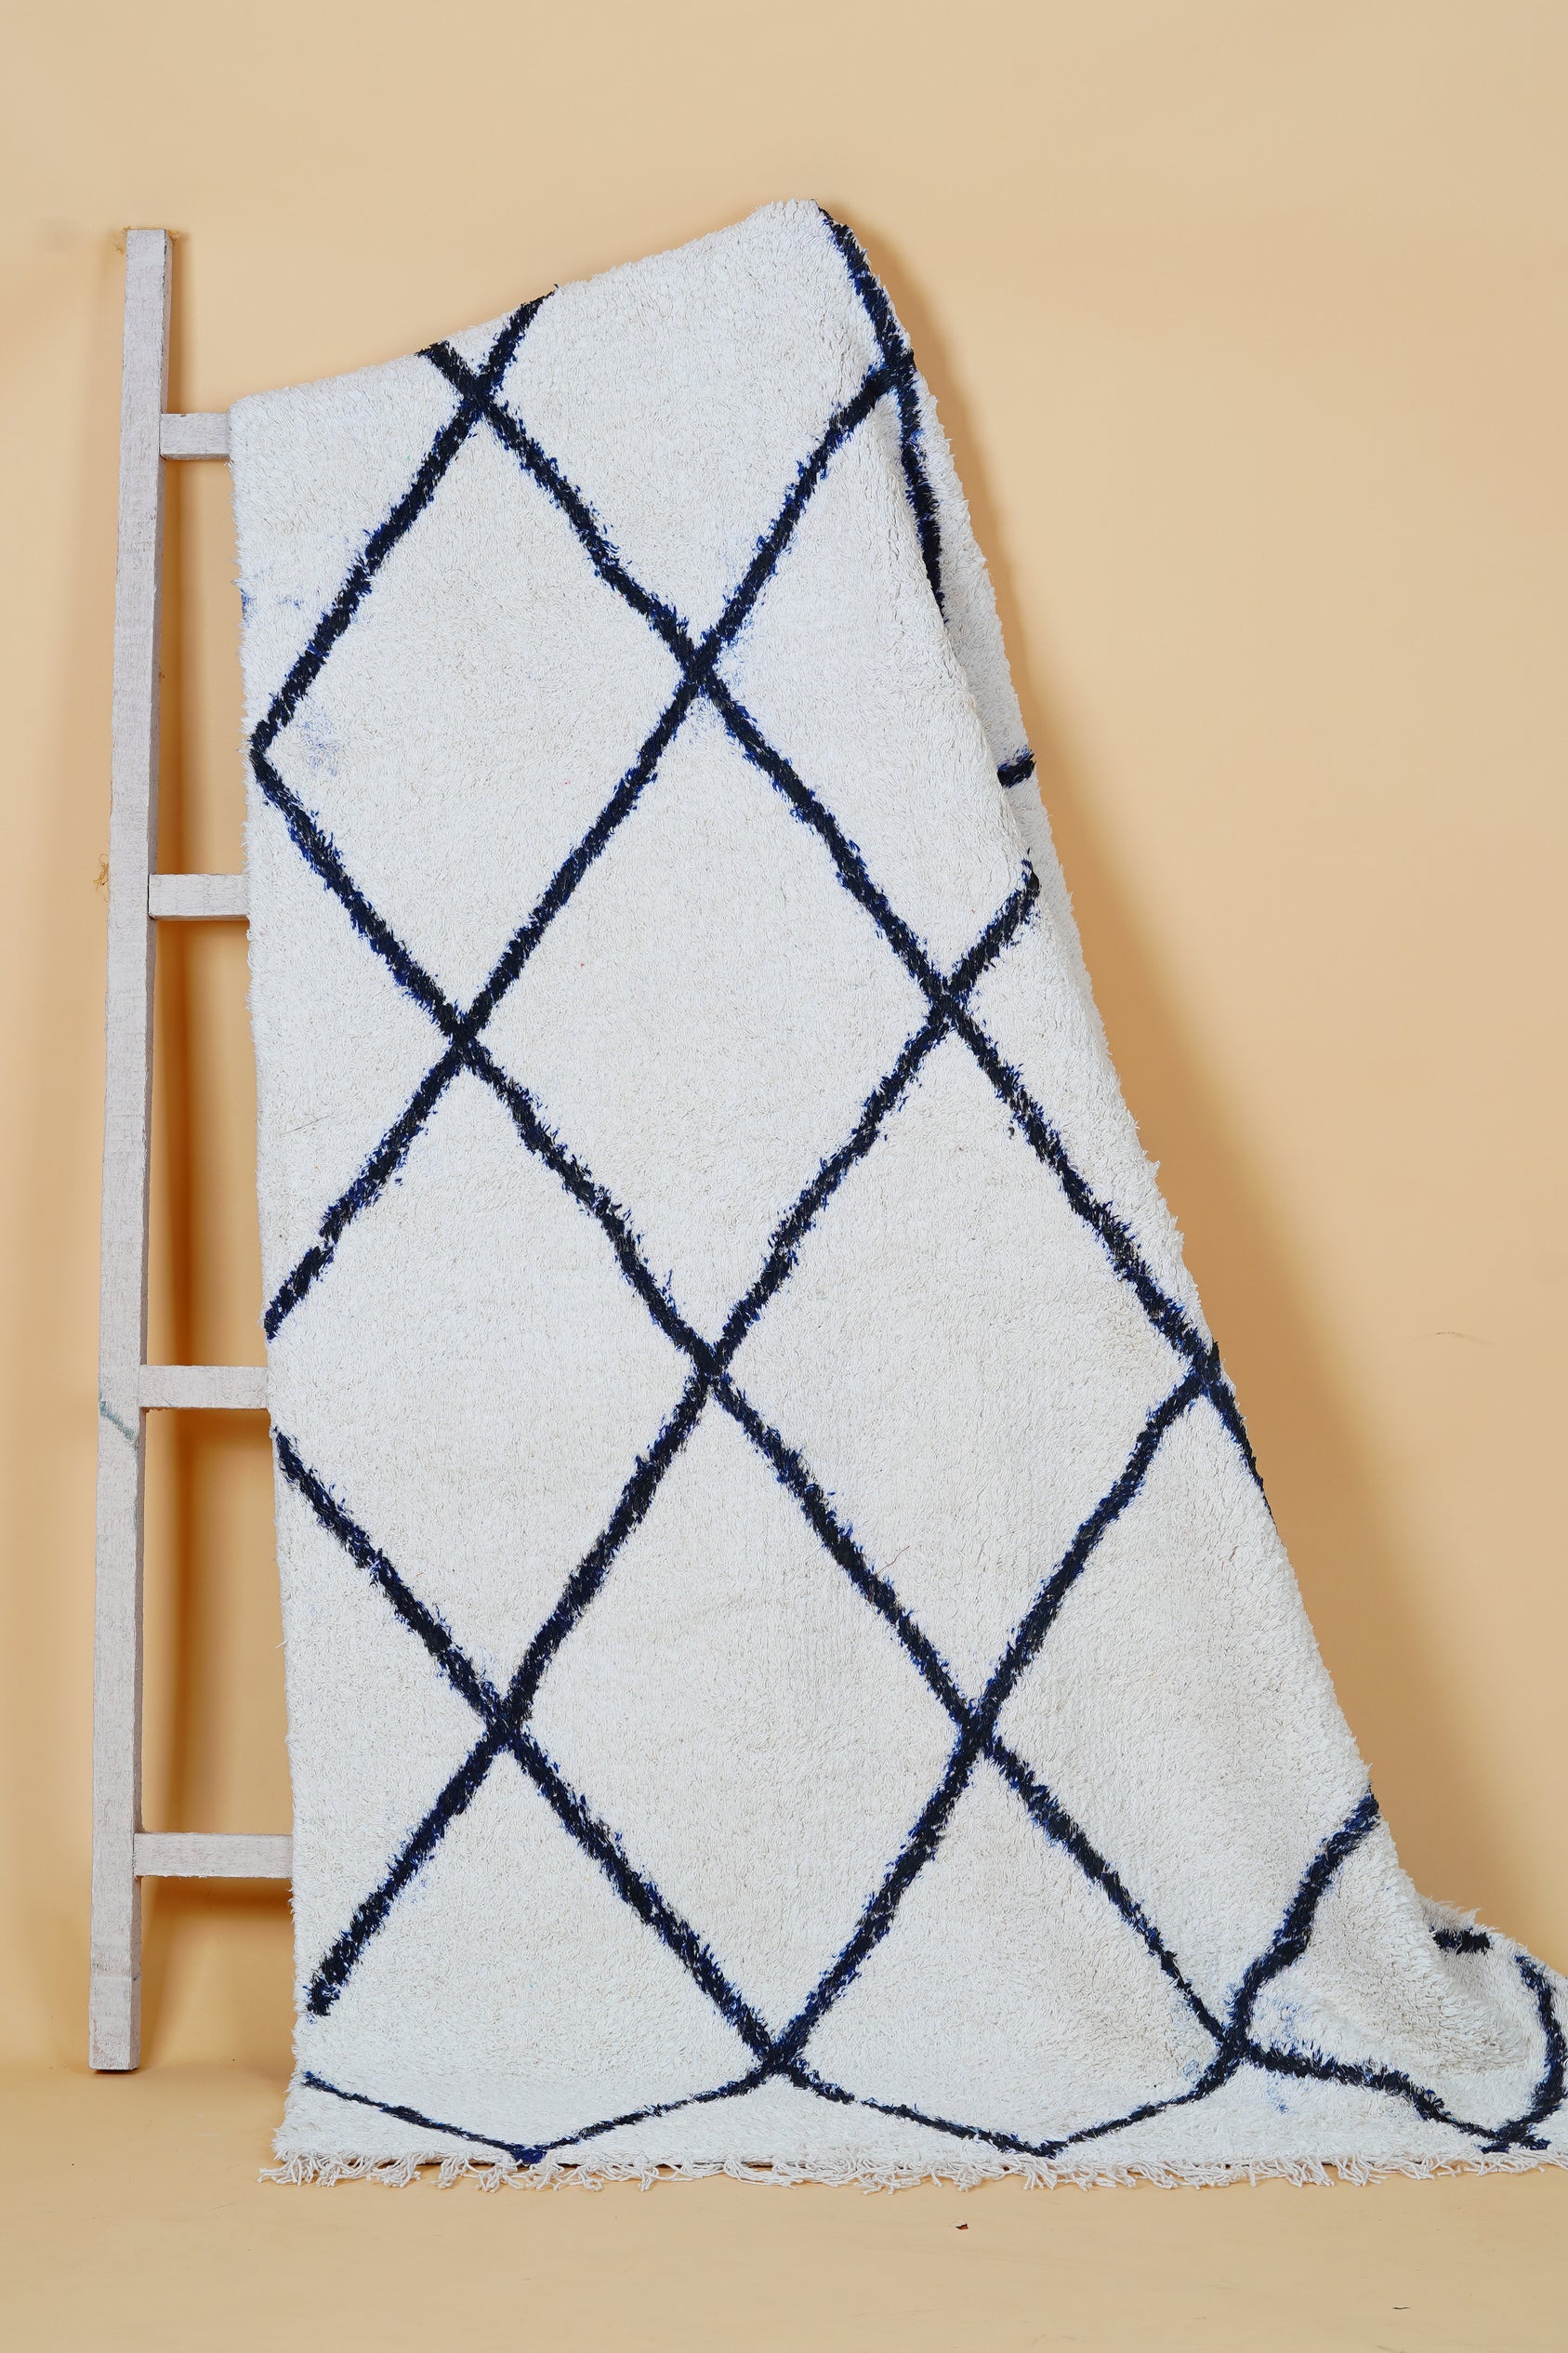 3 x 5 feet Fur Shaggy Carpet Area Rug- White and Black - The Teal Thread